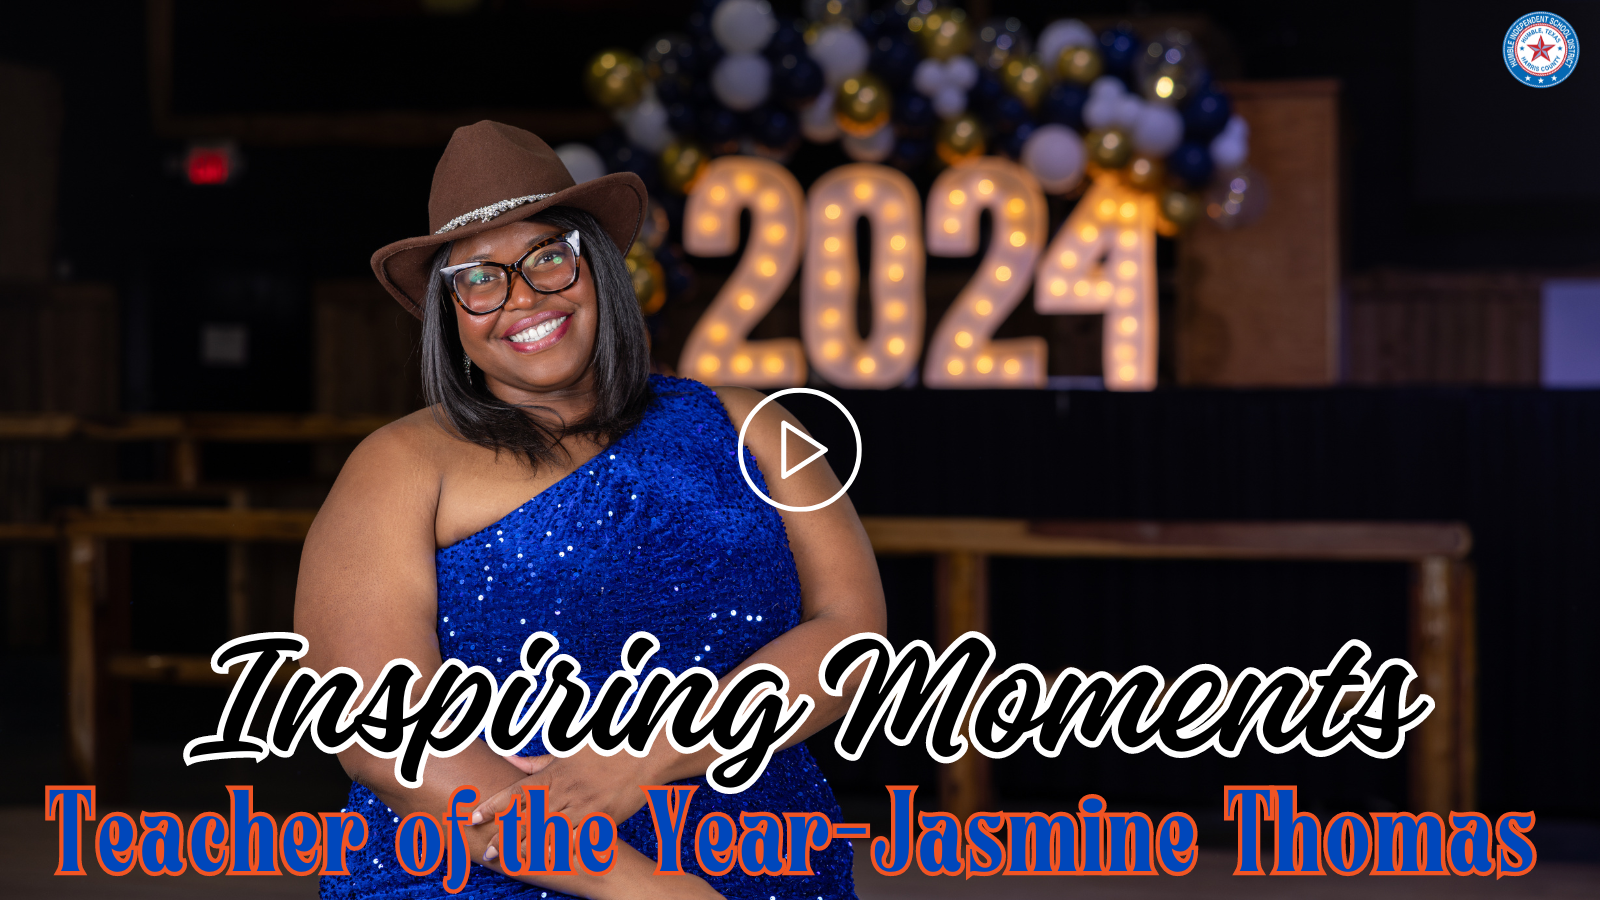 Inspiring Moments Teacher of the Year - Jasmine Thomas